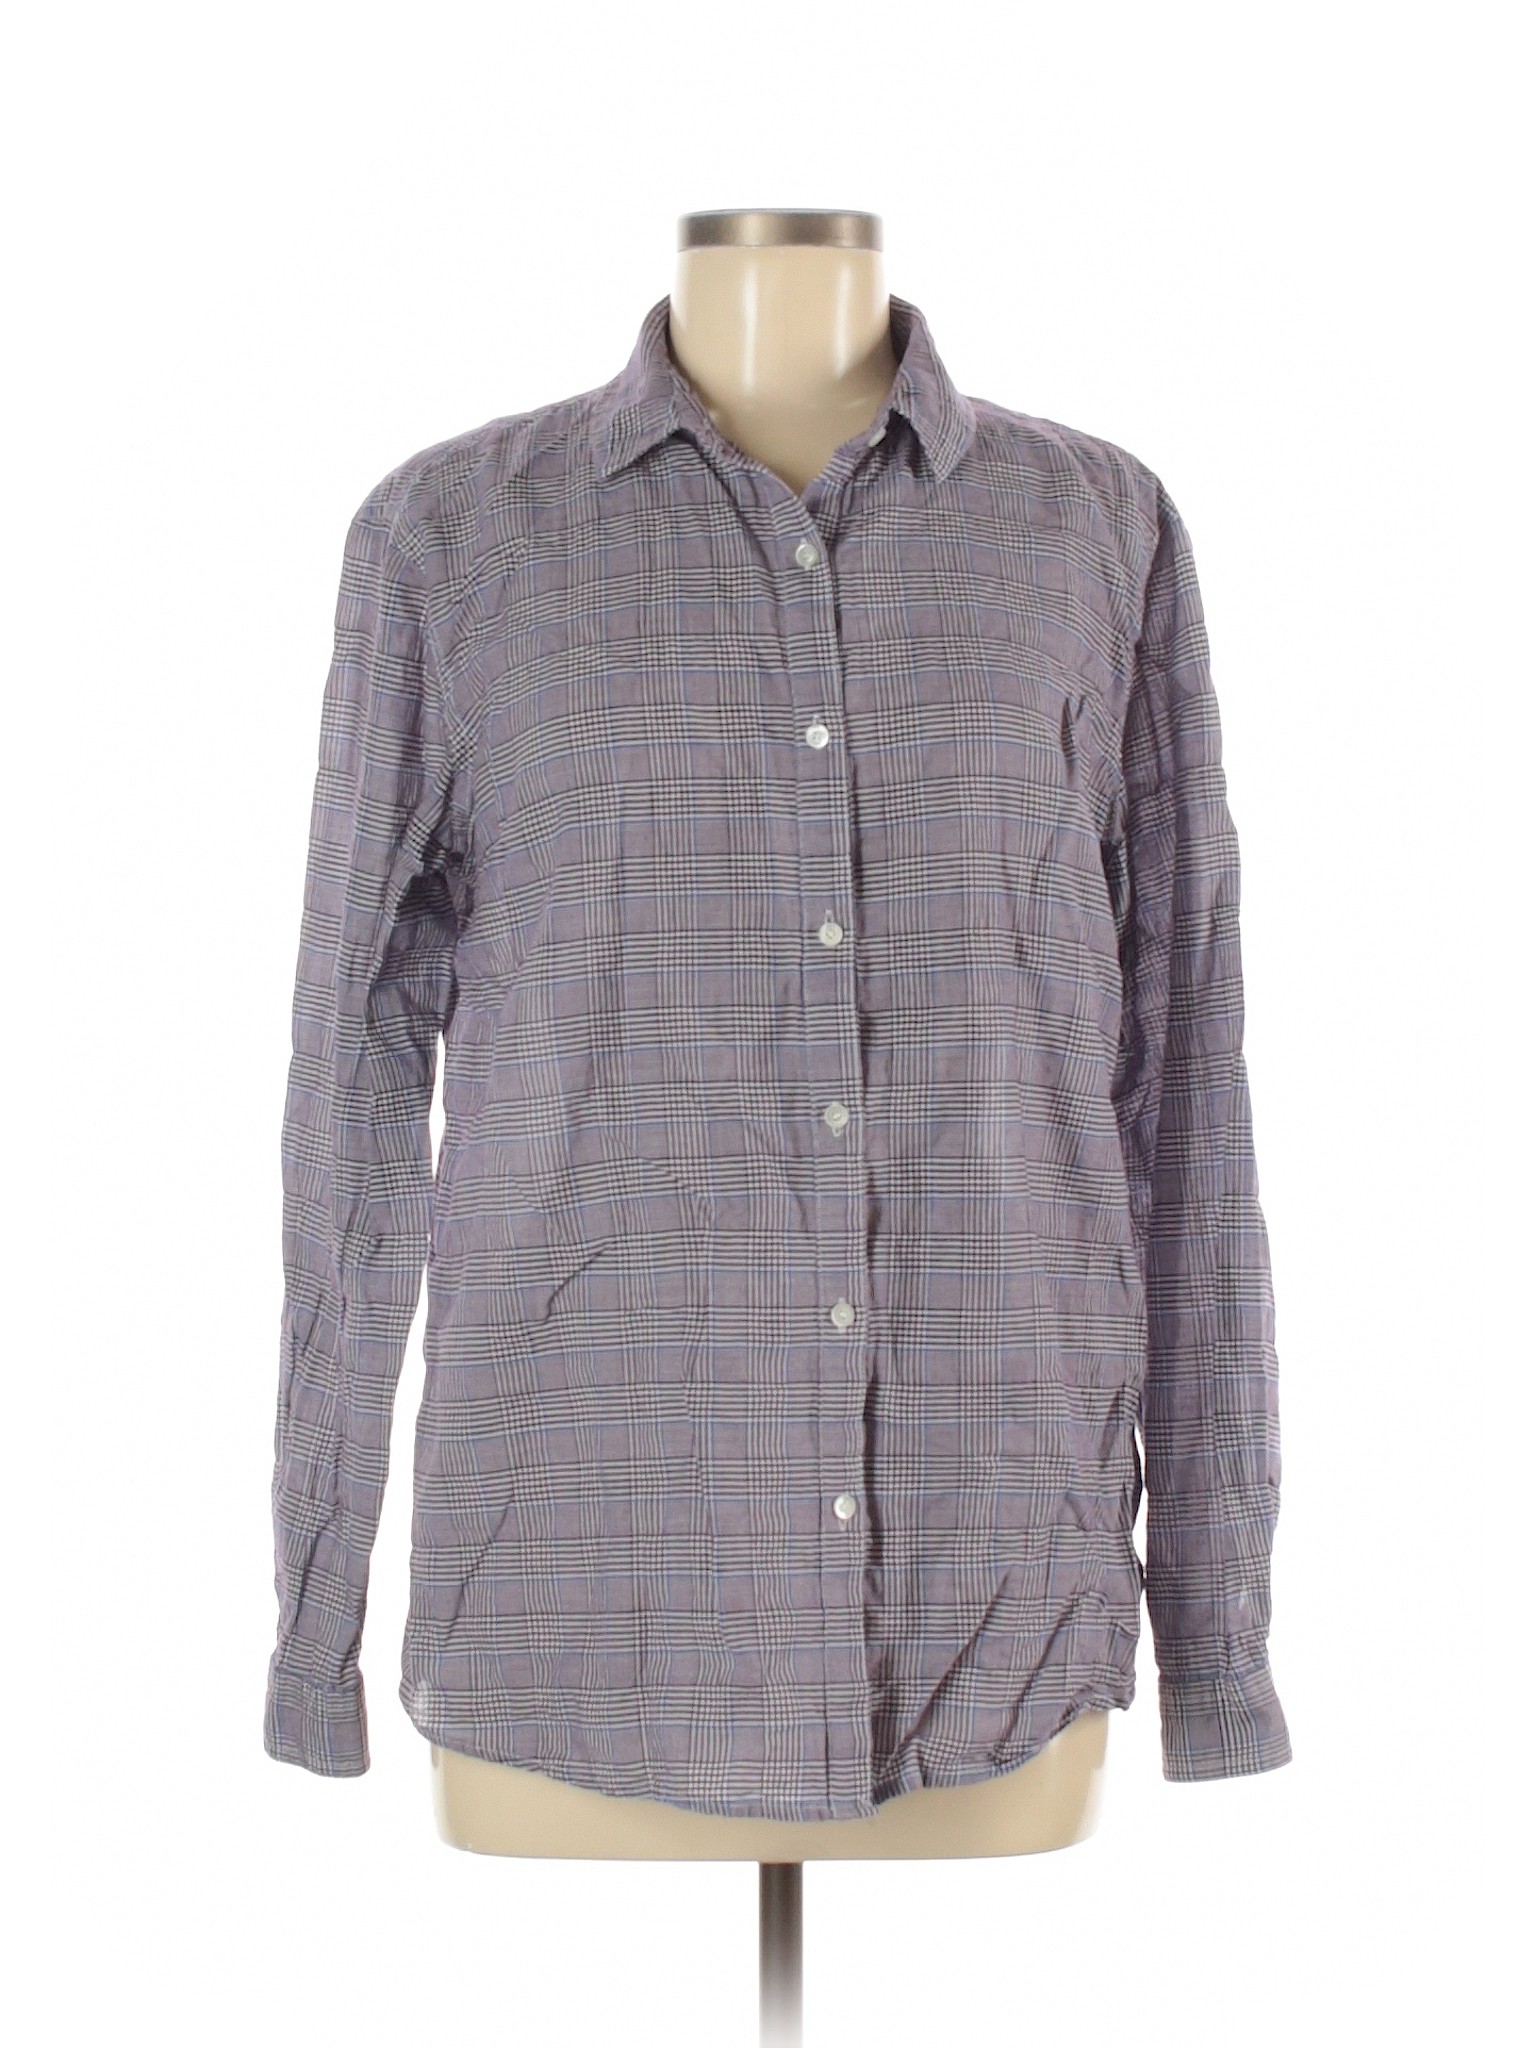 Jill mcgowan Women Gray Long Sleeve Button-Down Shirt M | eBay